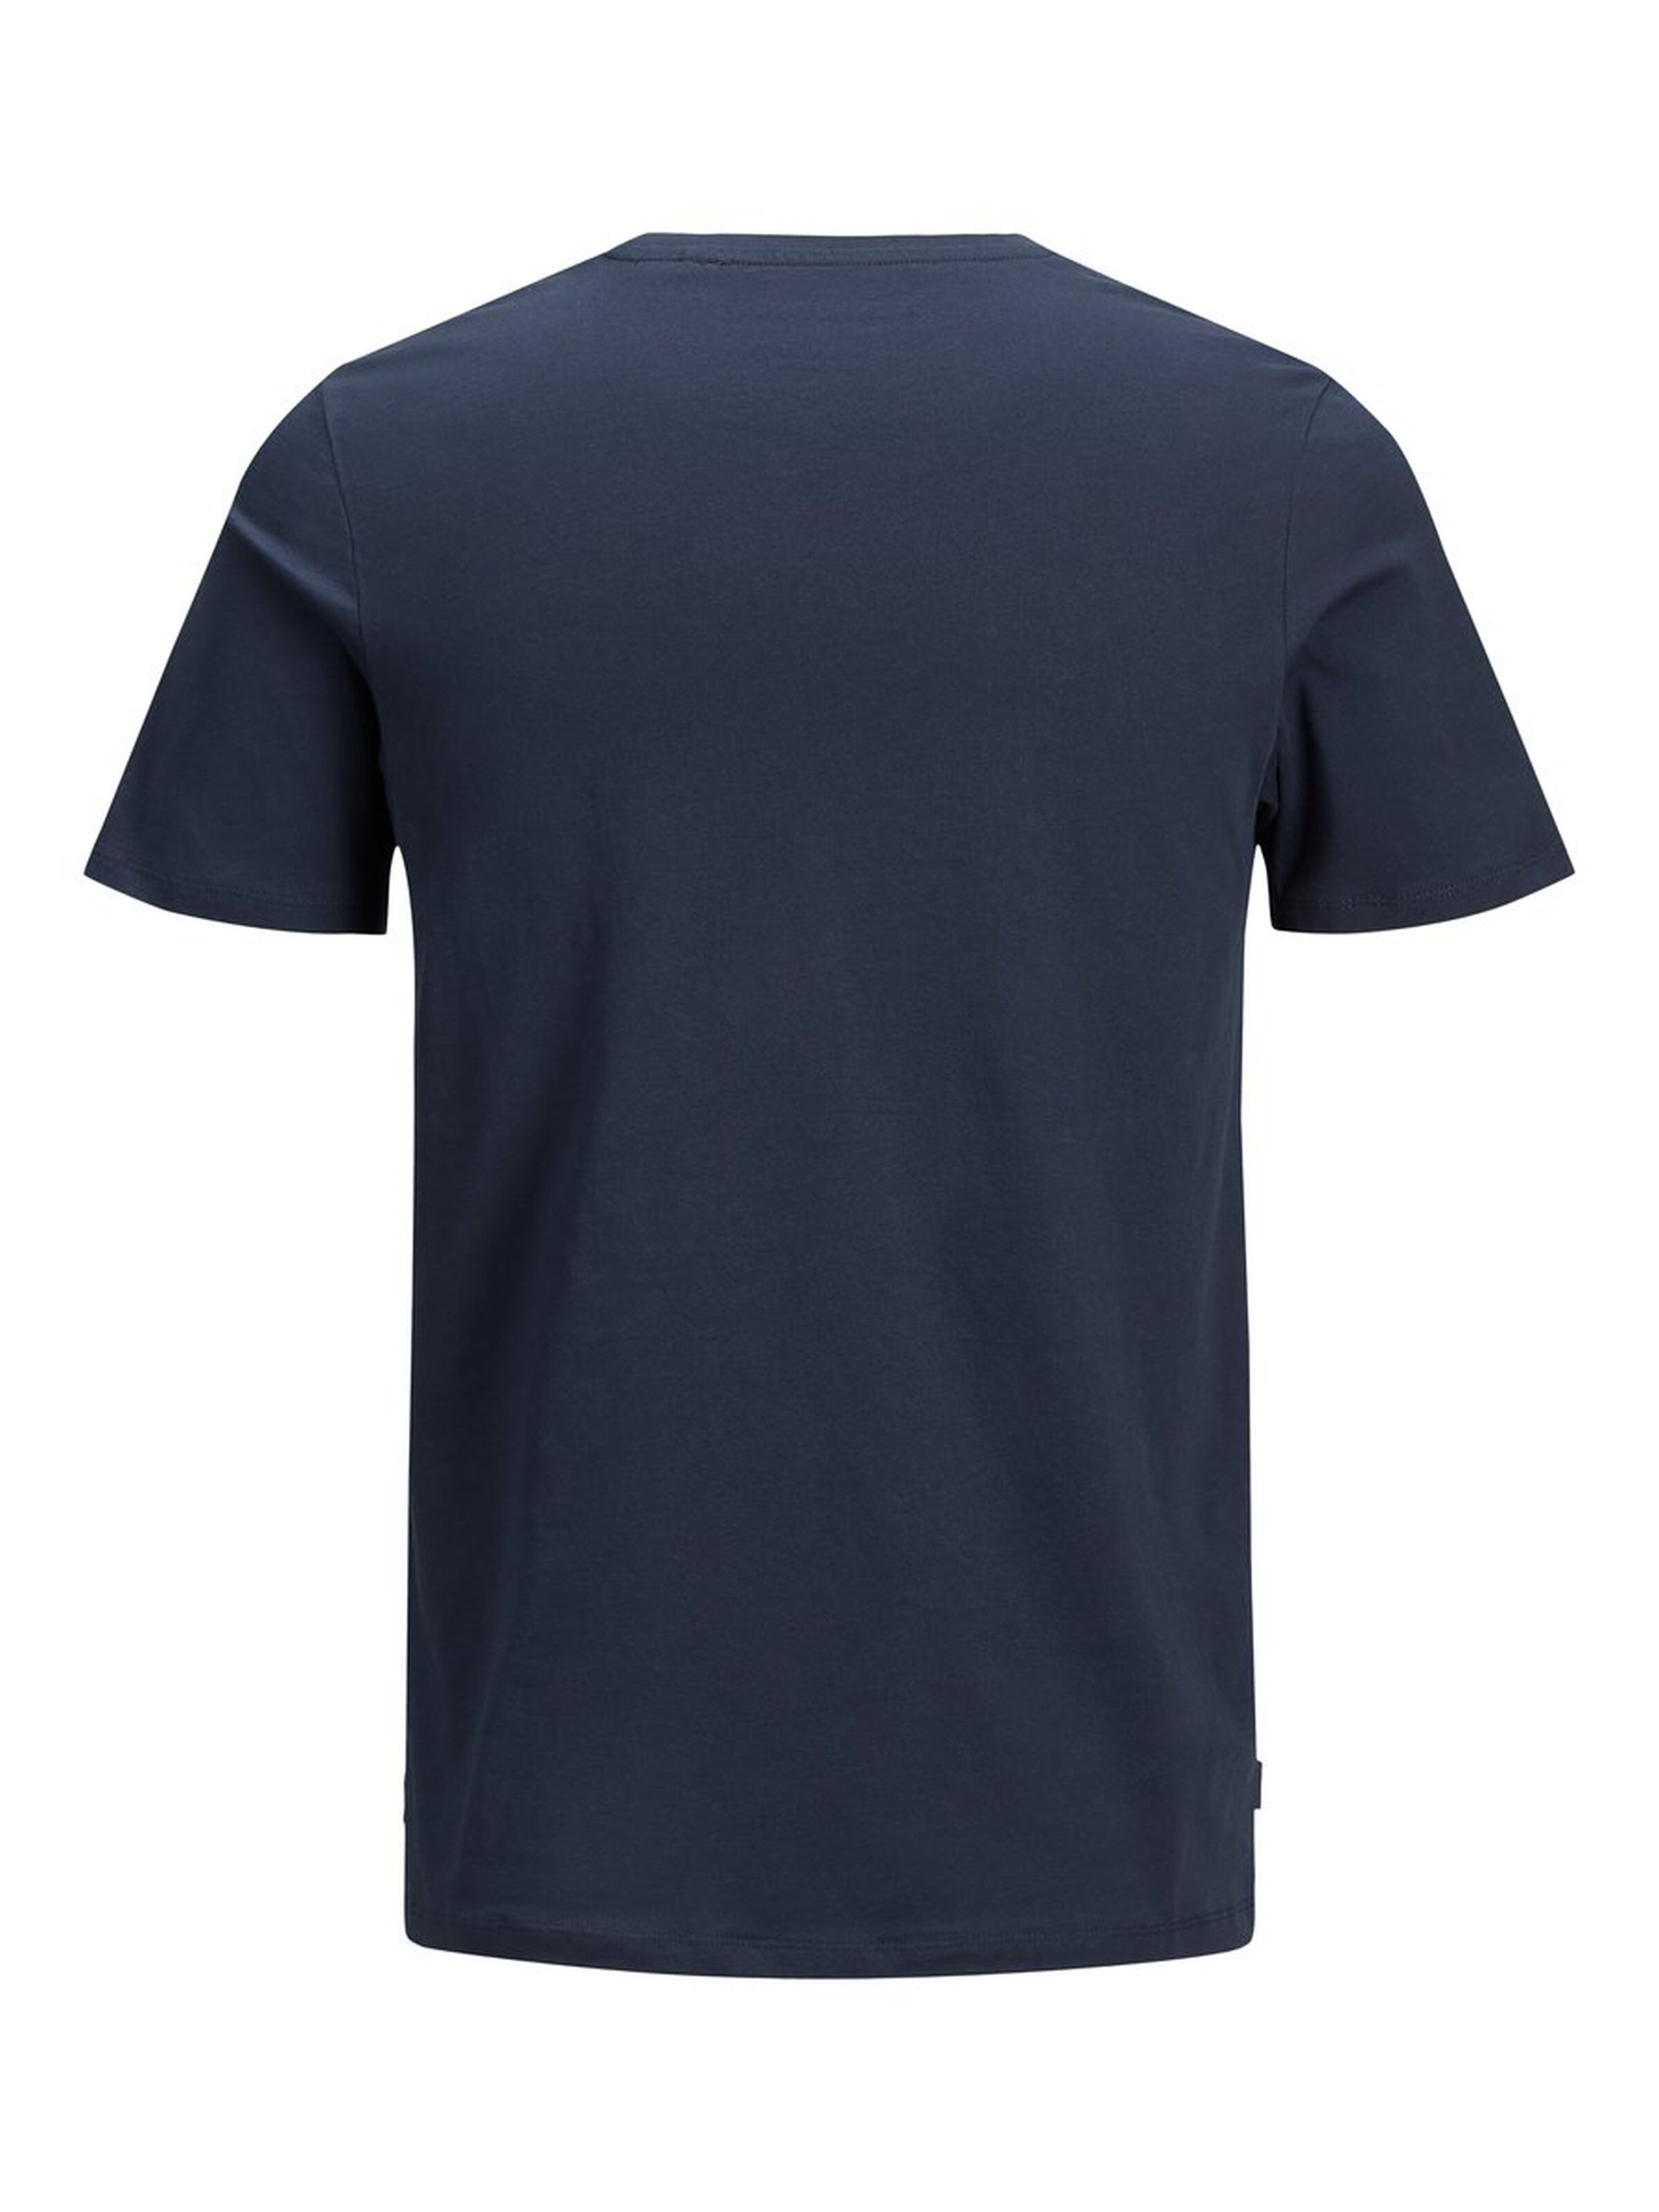 Jack & Jones - T-shirt in cotone, Blu scuro, large image number 1